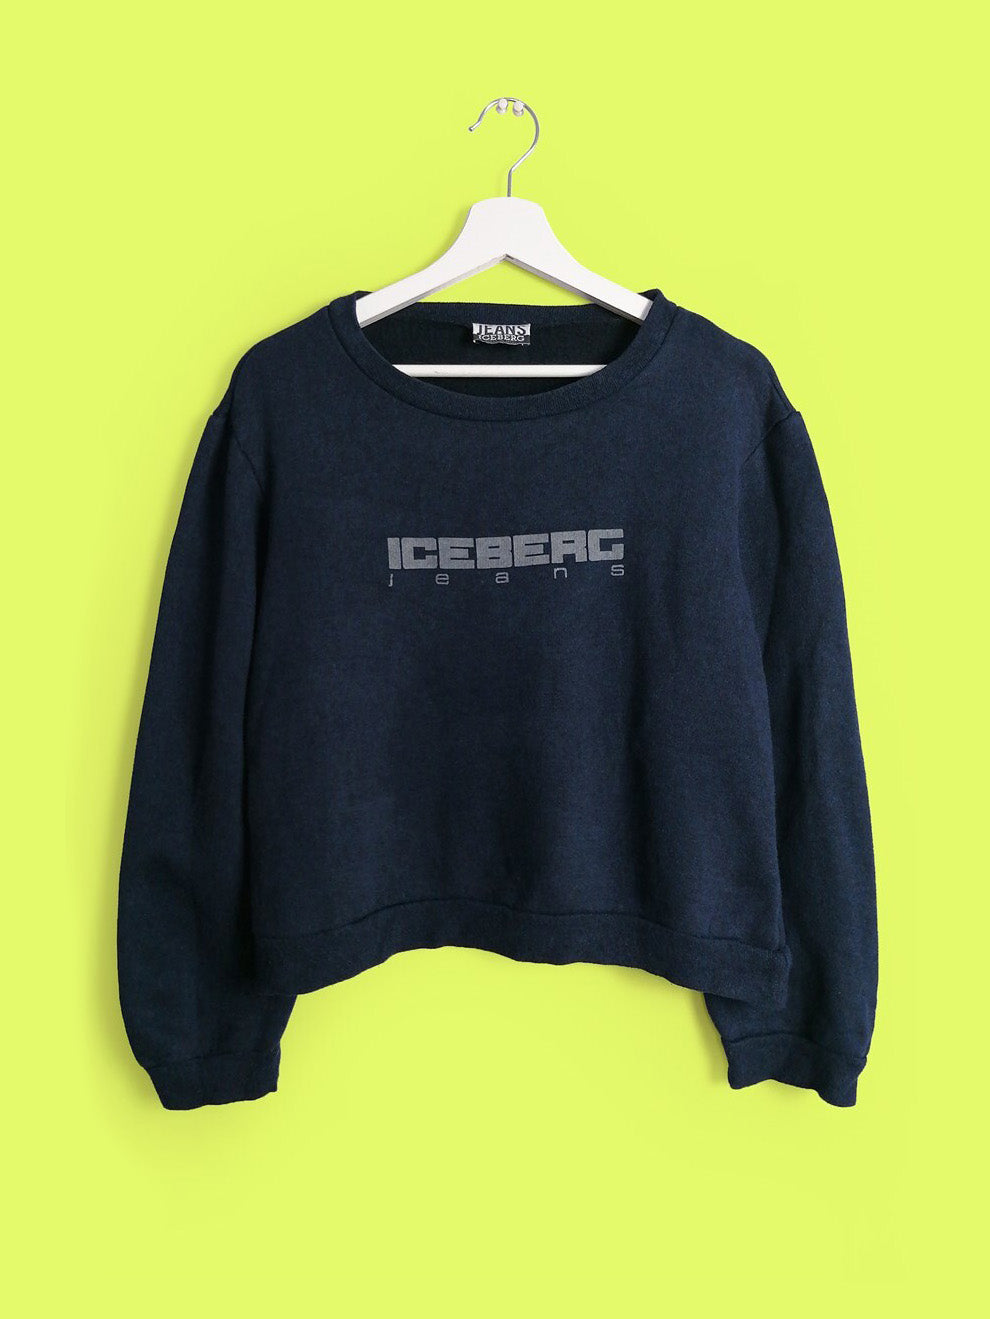 ICEBERG JEANS Crop Sweatshirt - size S-M